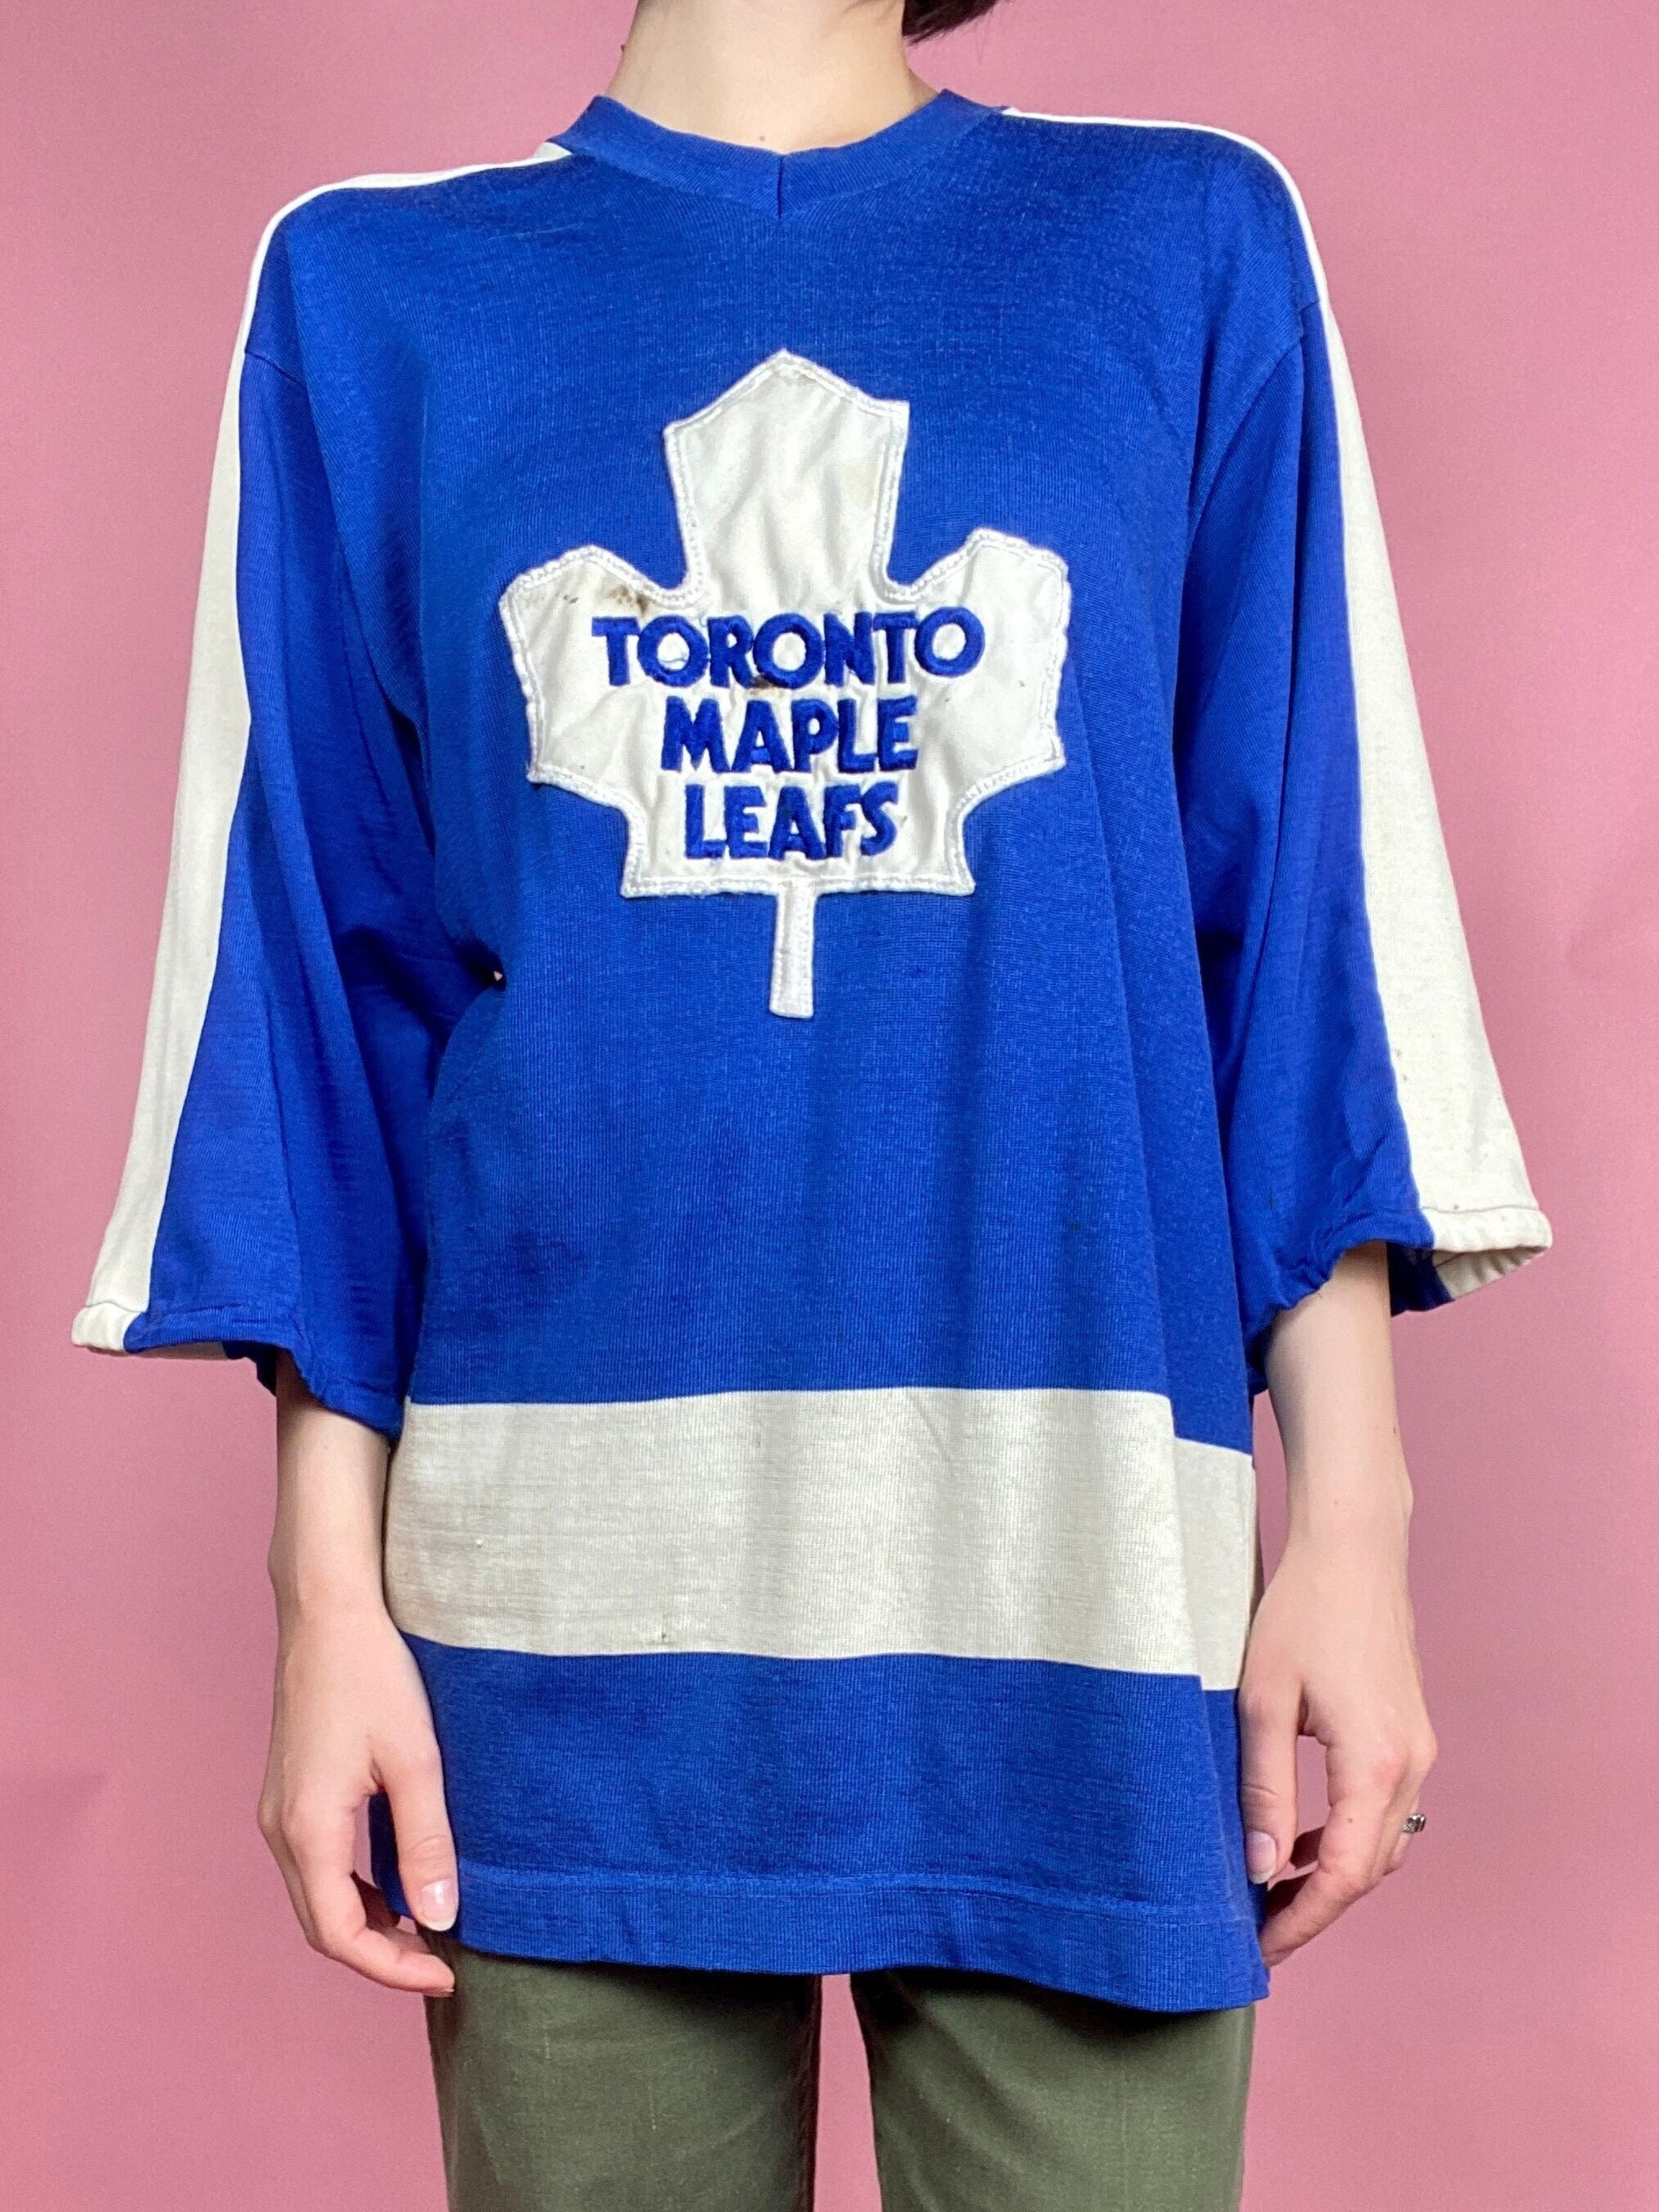 Personalized NHL Toronto Maple Leafs native American jersey shirt